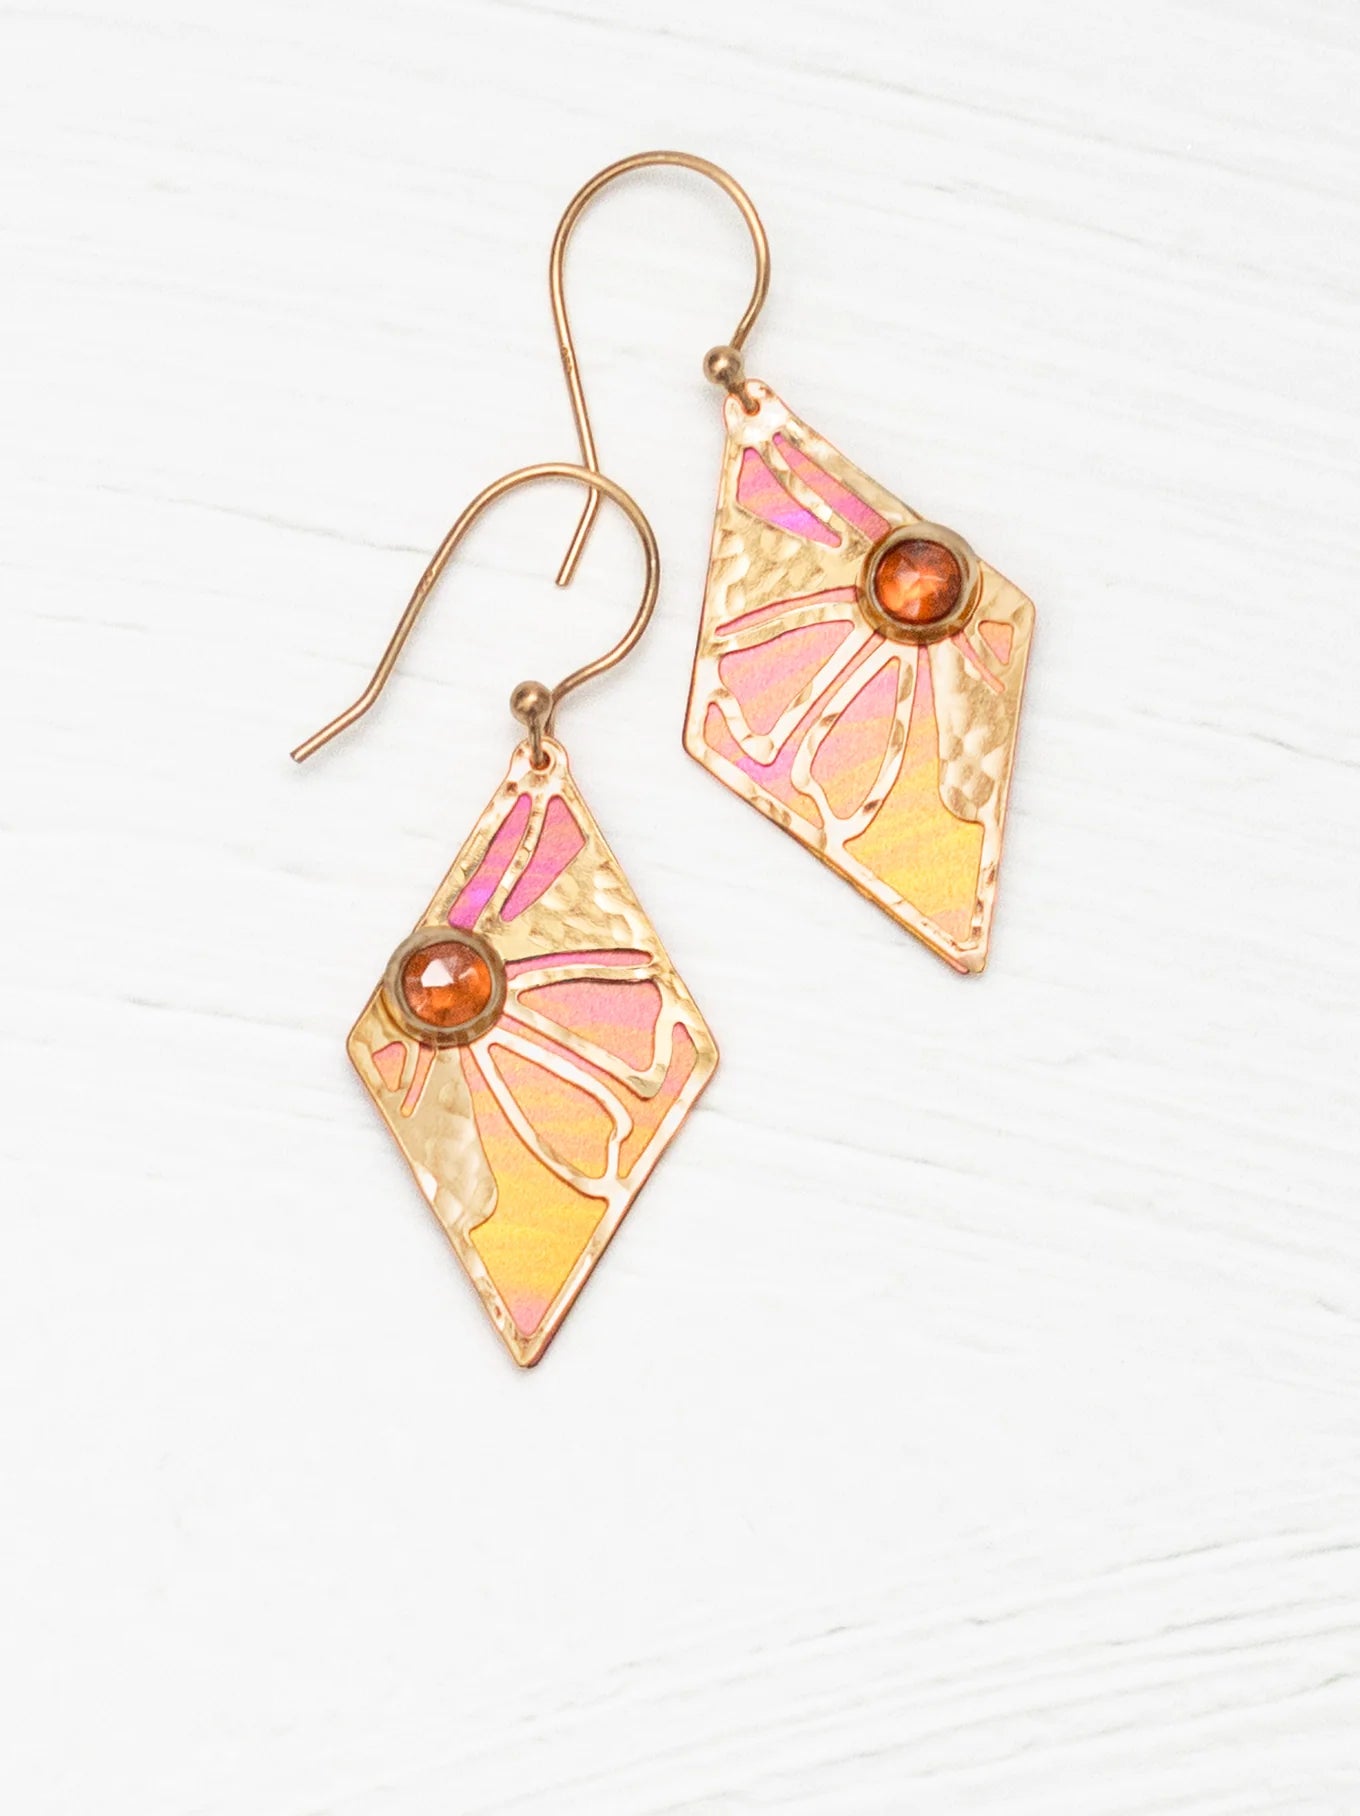 gold earrings with orange gemstone